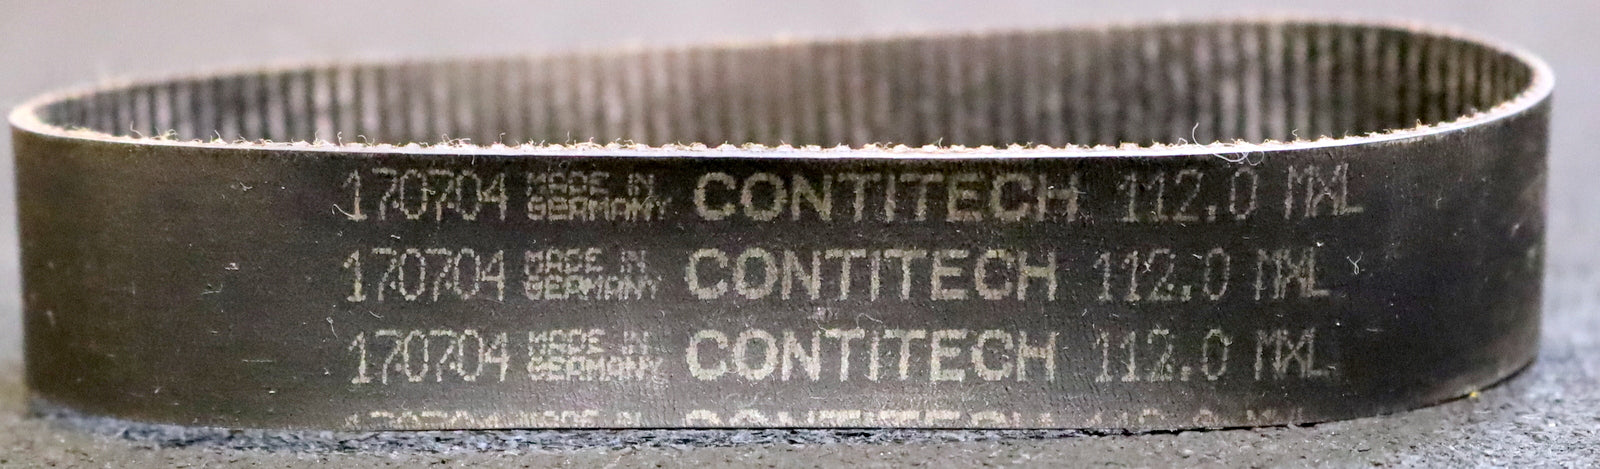 CONTITECH 2xZahnriemen 2x Timing belt 112.0MXL Länge 284,48mm Breite 20mm